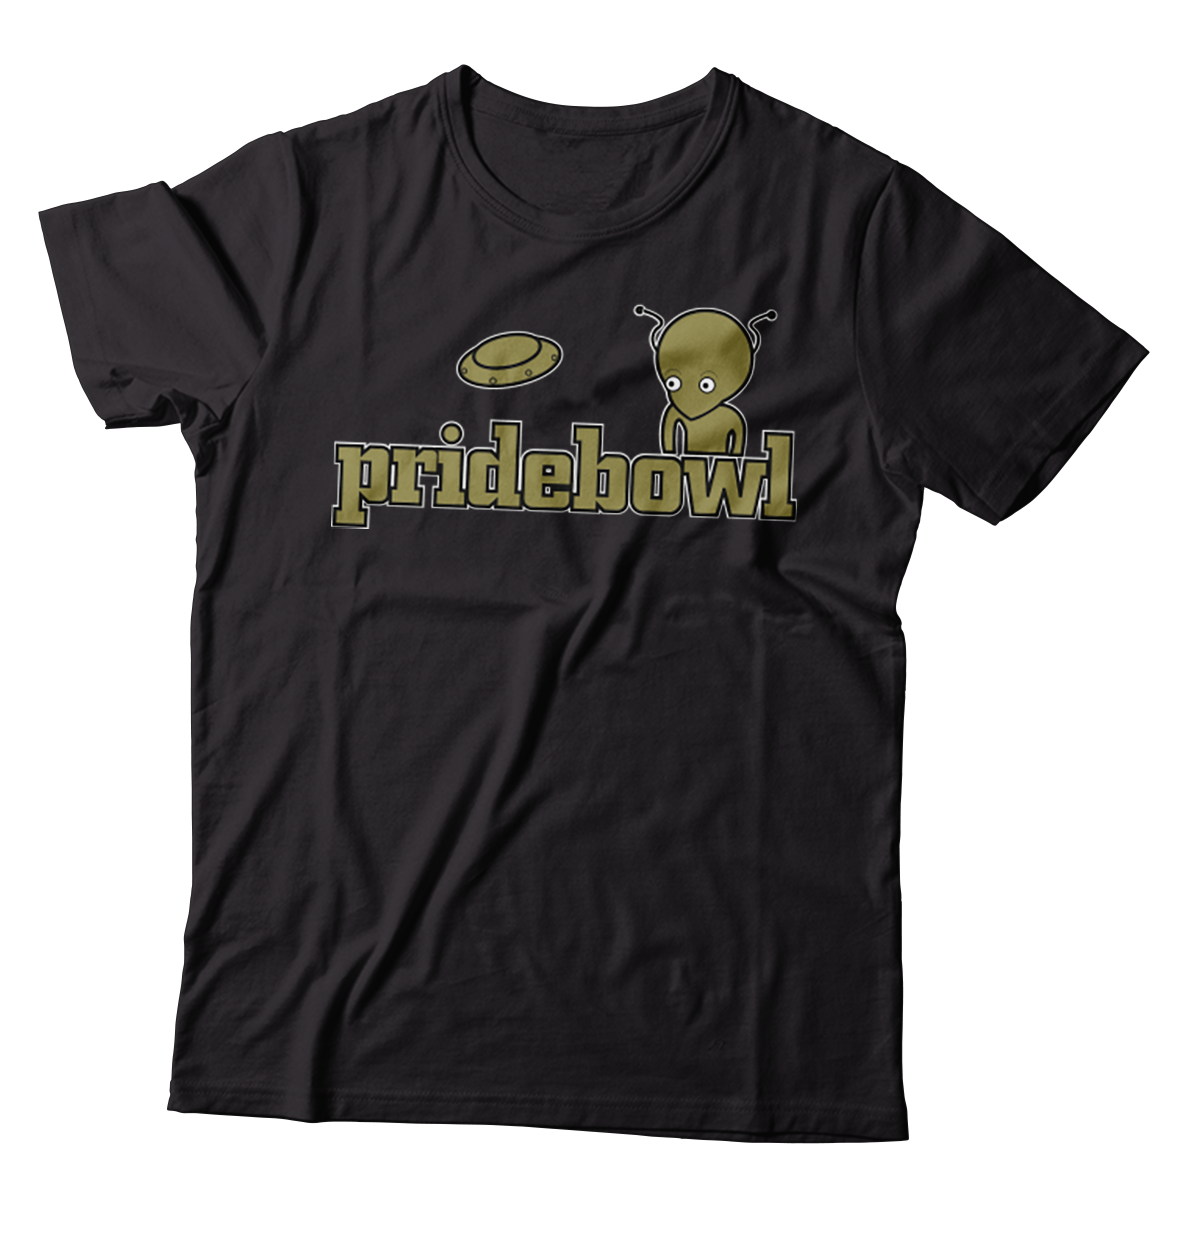 PRIDEBOWL - "Alien" (Black) (T-Shirt)